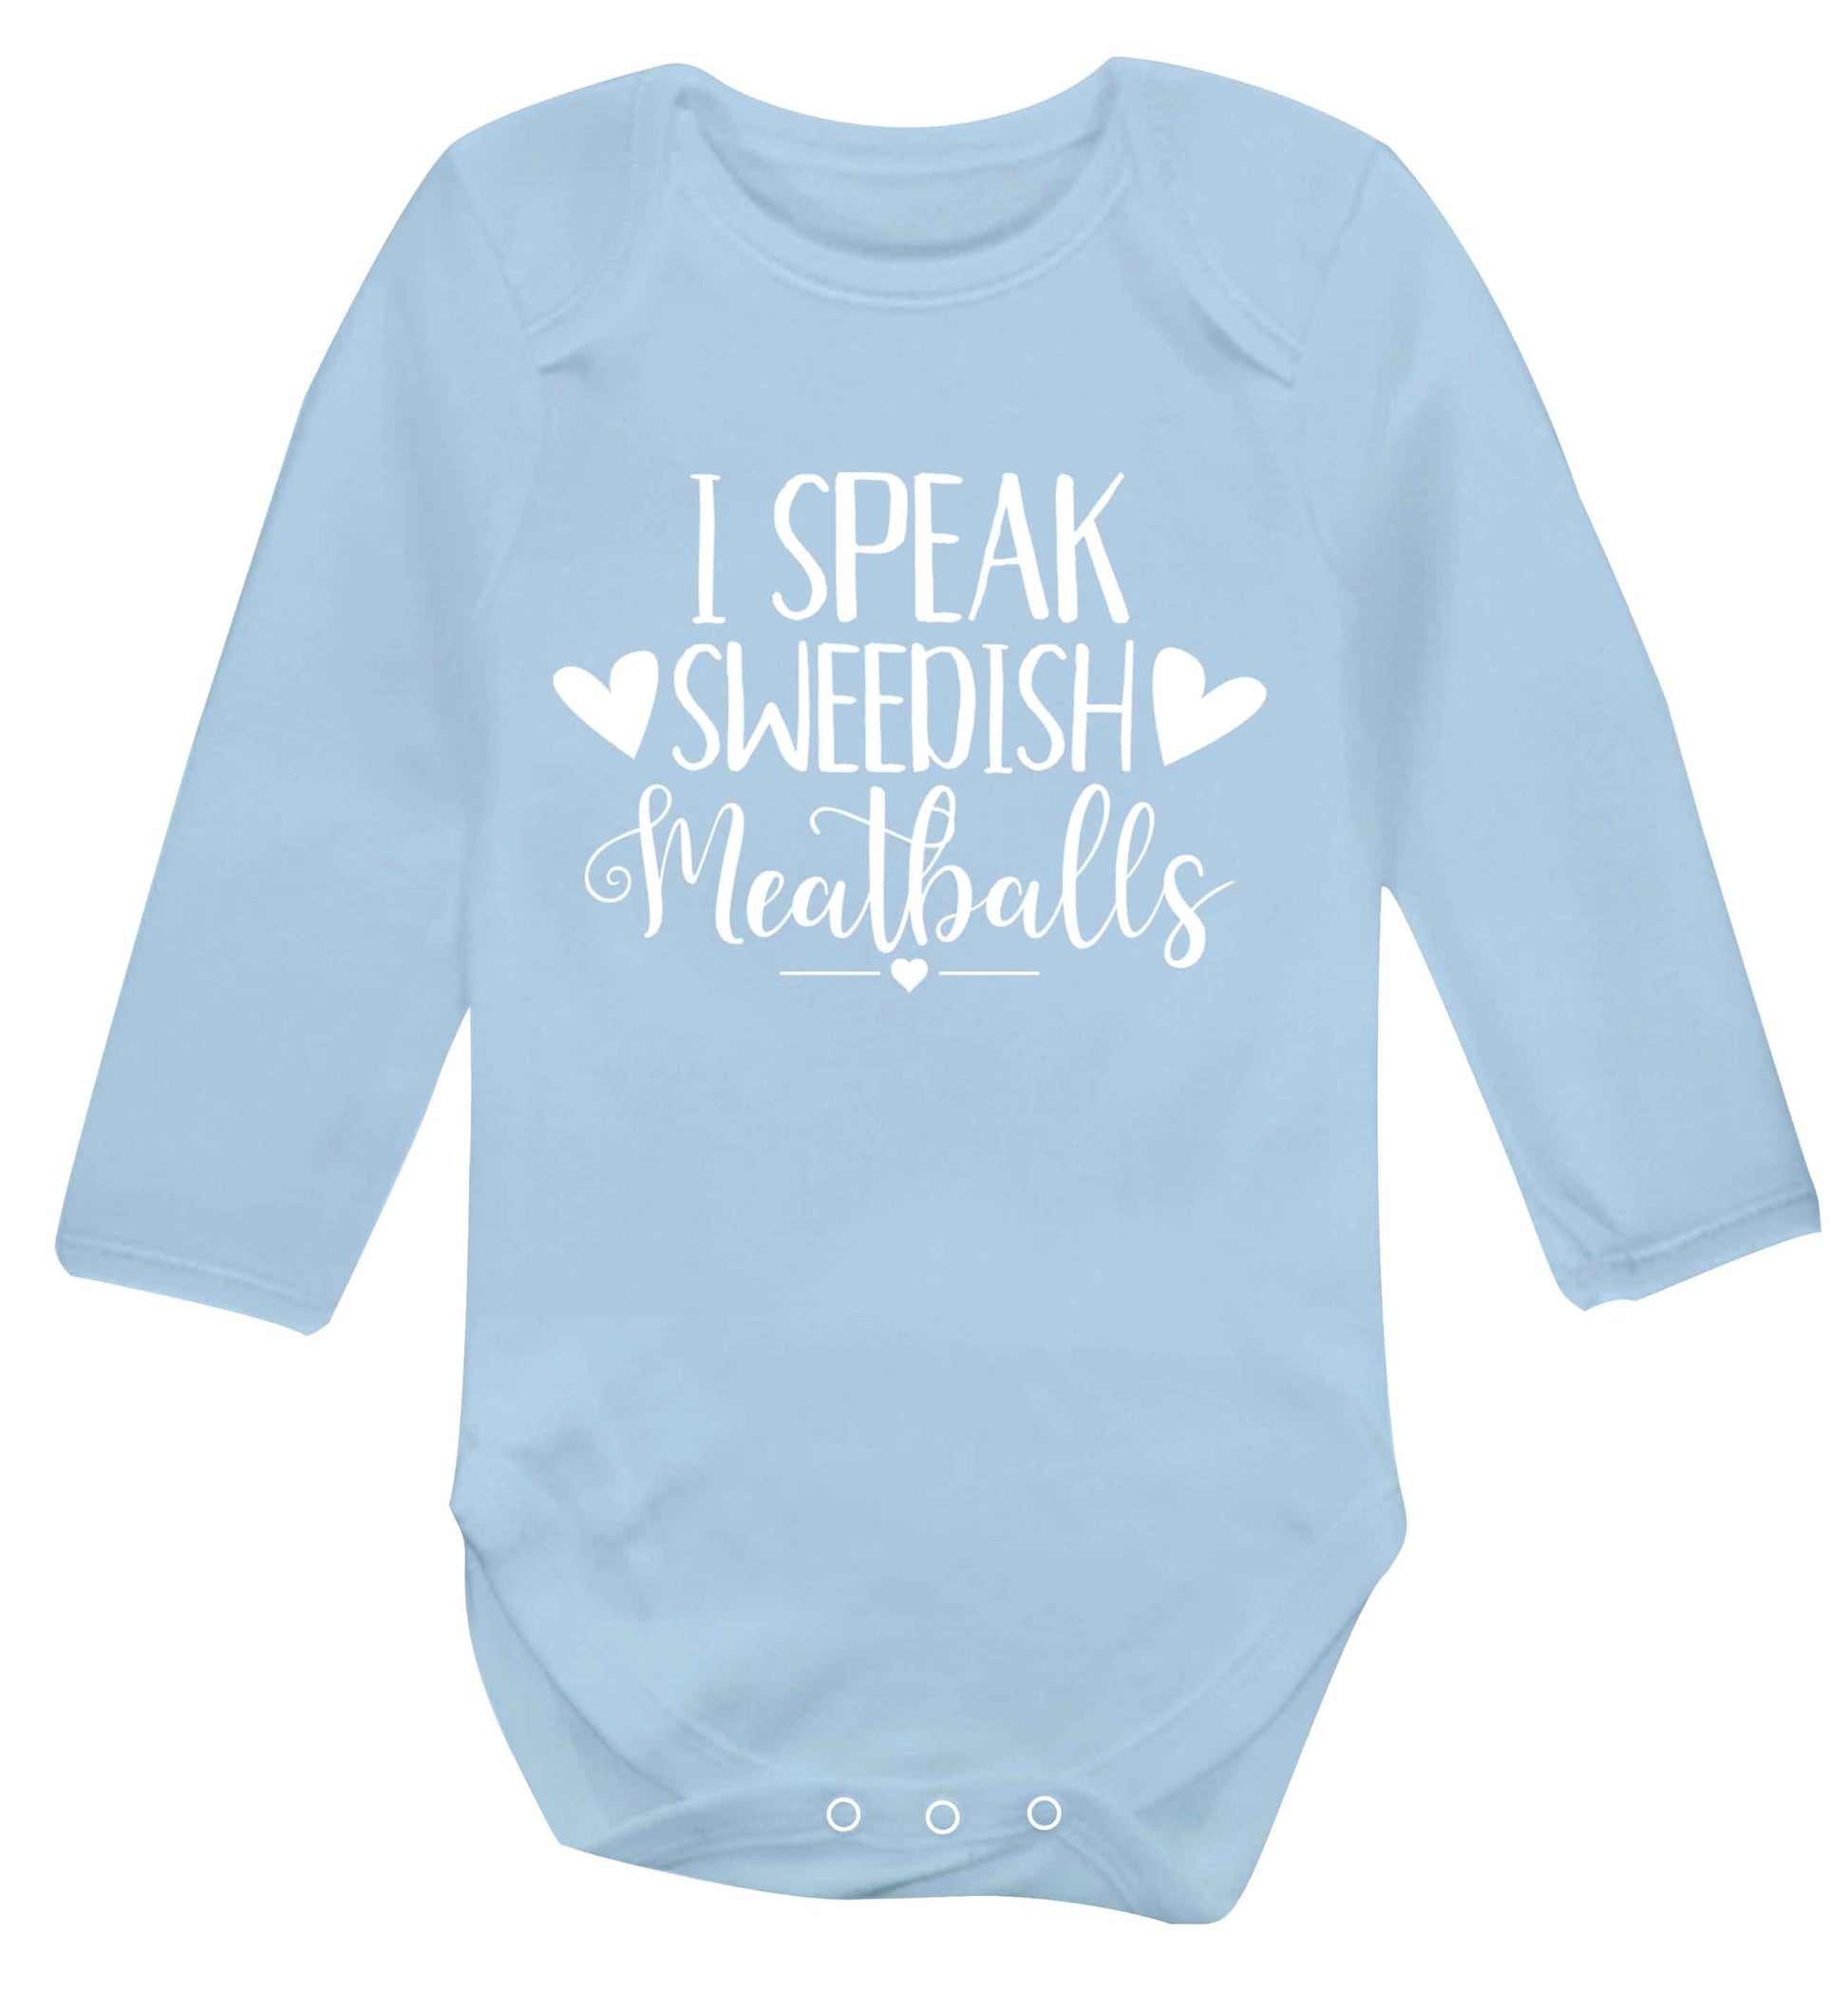 I speak sweedish...meatballs Baby Vest long sleeved pale blue 6-12 months